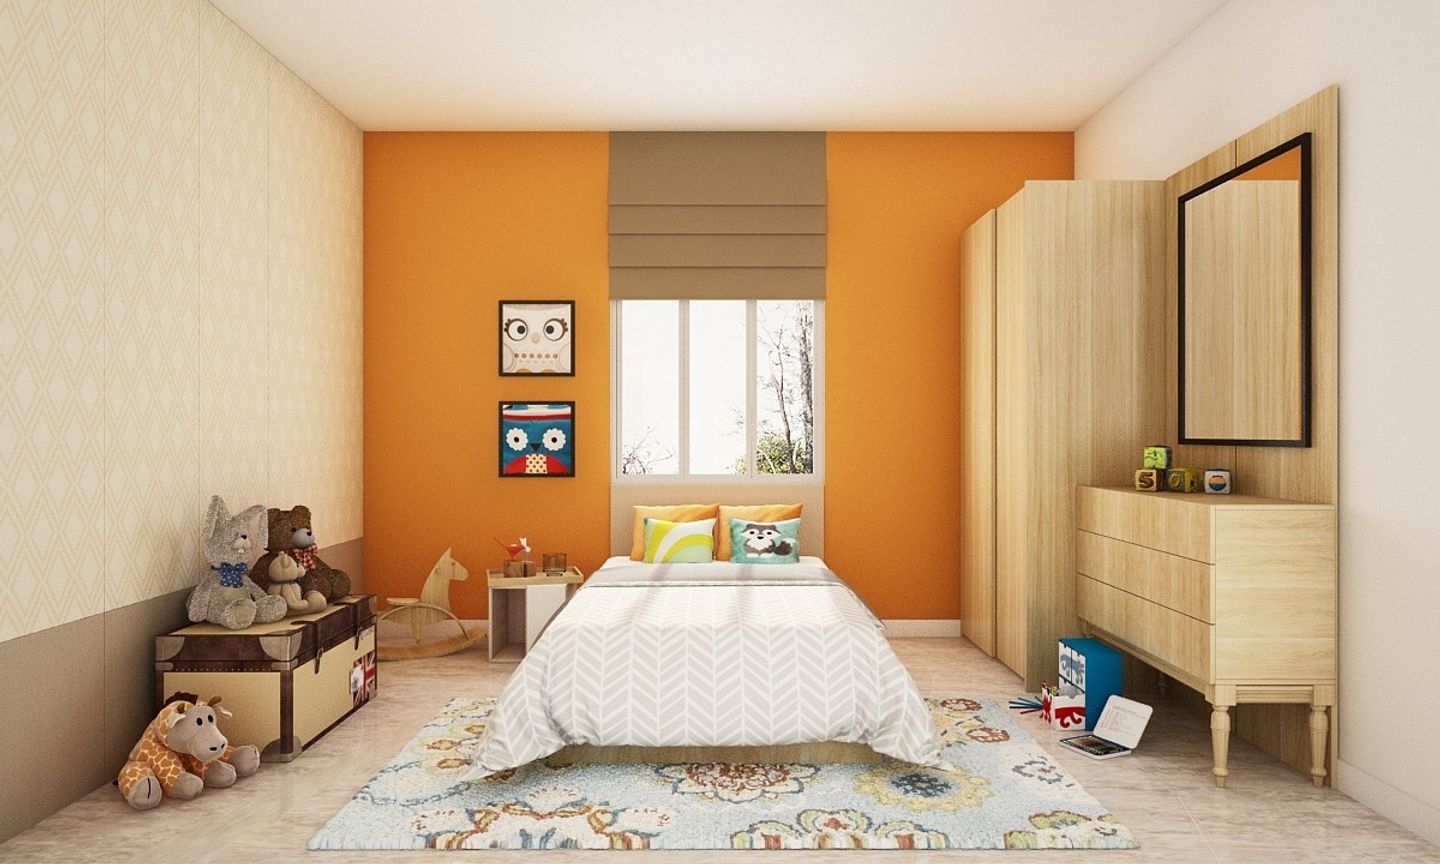 Contemporary Kid's Room Design With Oak And Orange Interiors